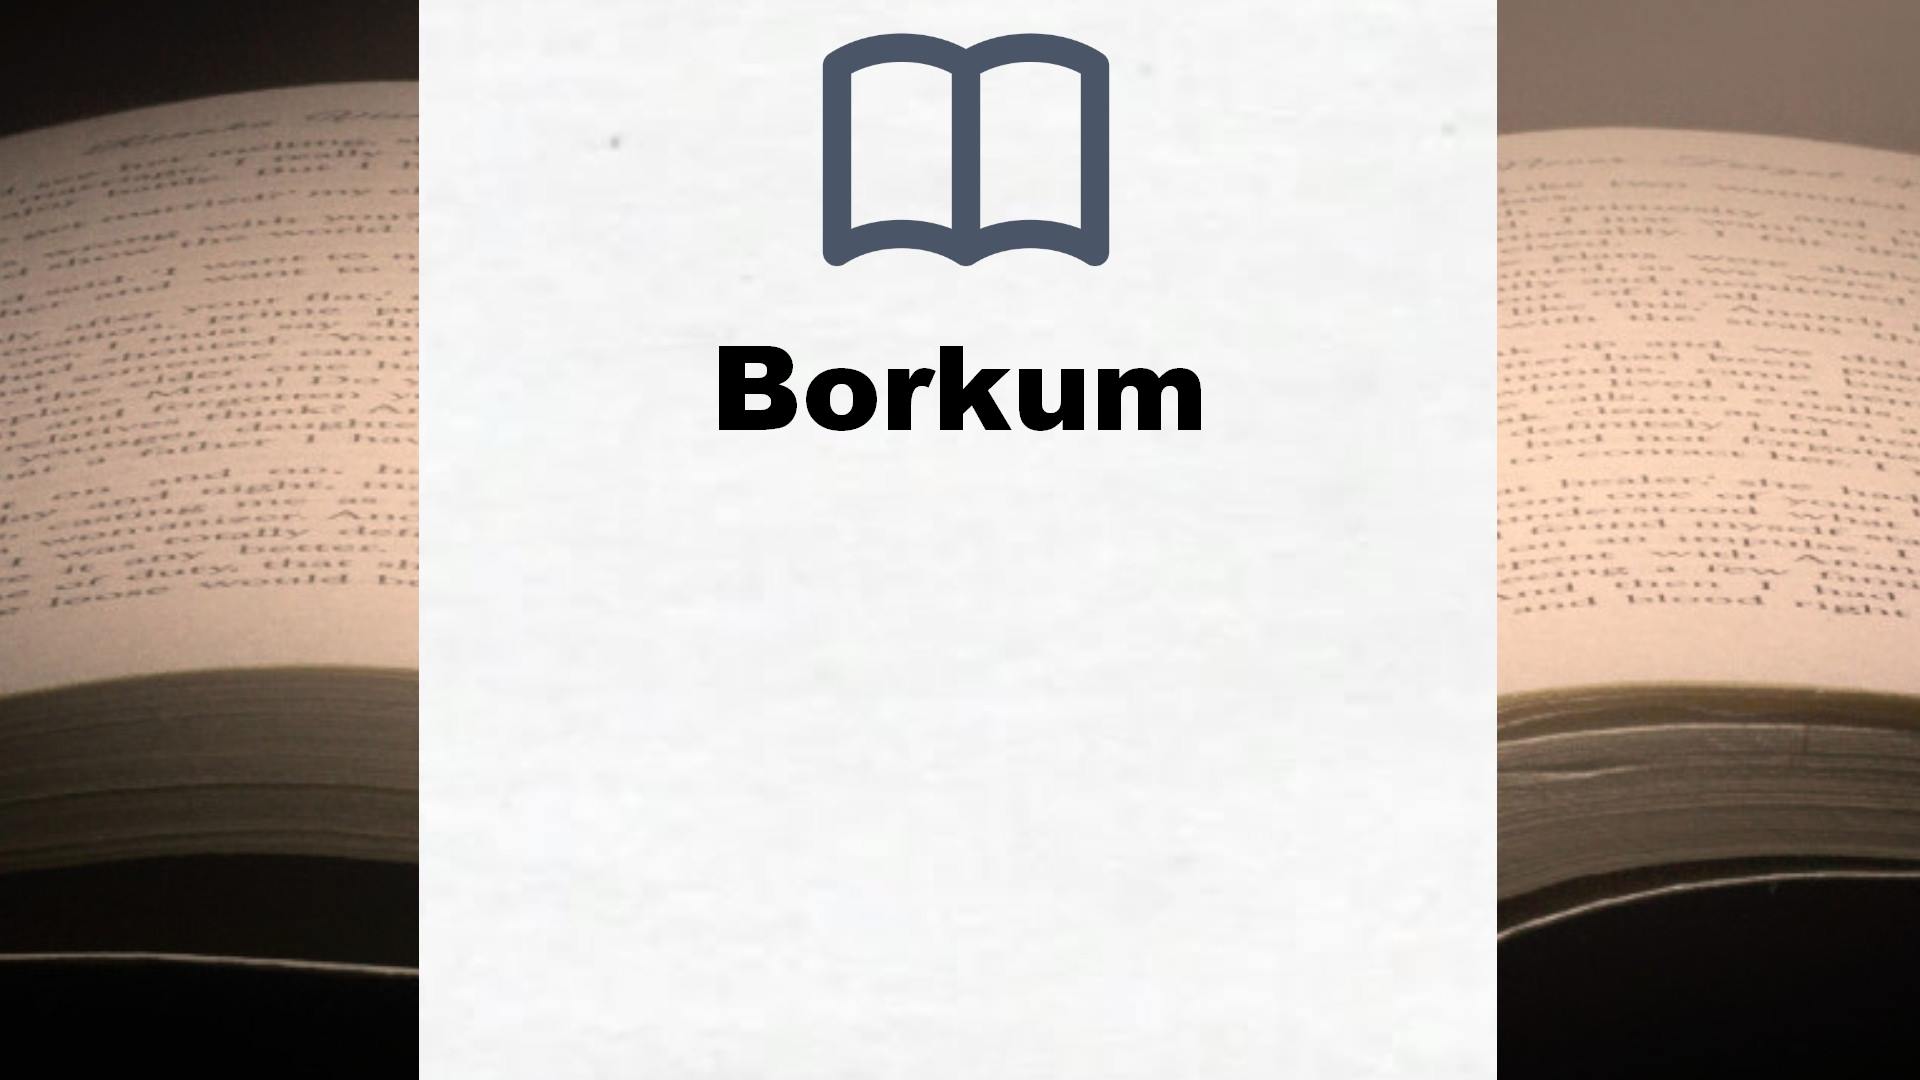 Bücher über Borkum